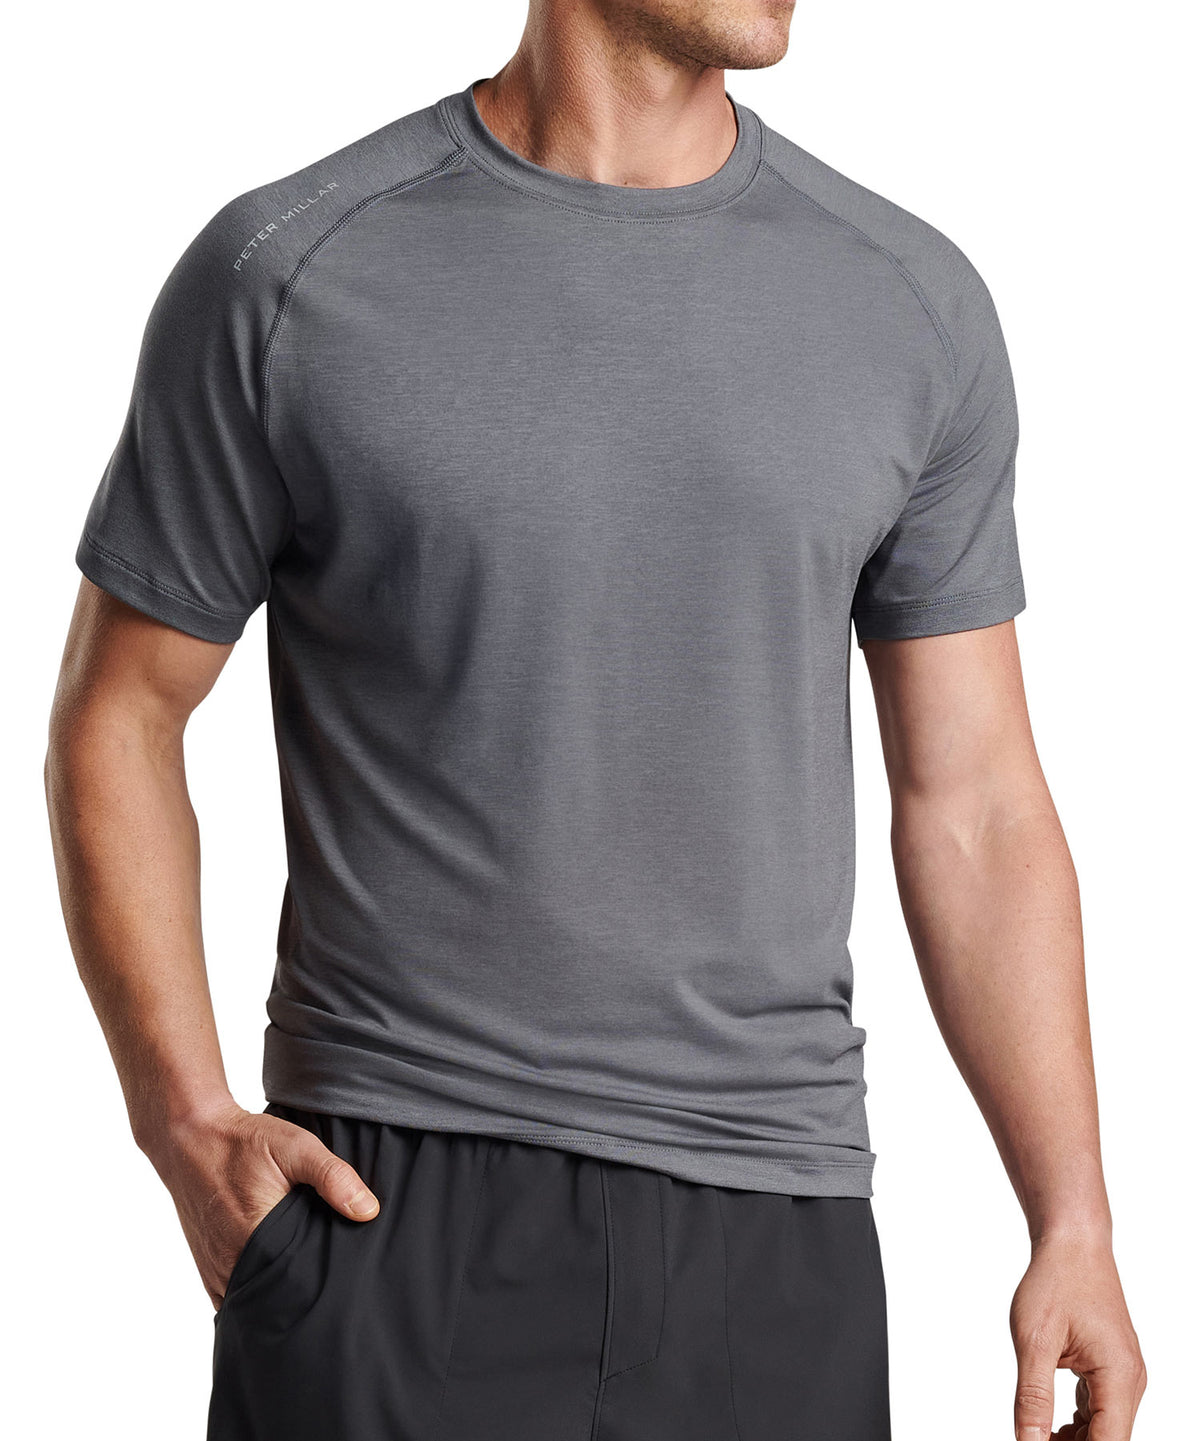 Peter Millar Short Sleeve Aurora Stretch Performance T-Shirt, Big & Tall